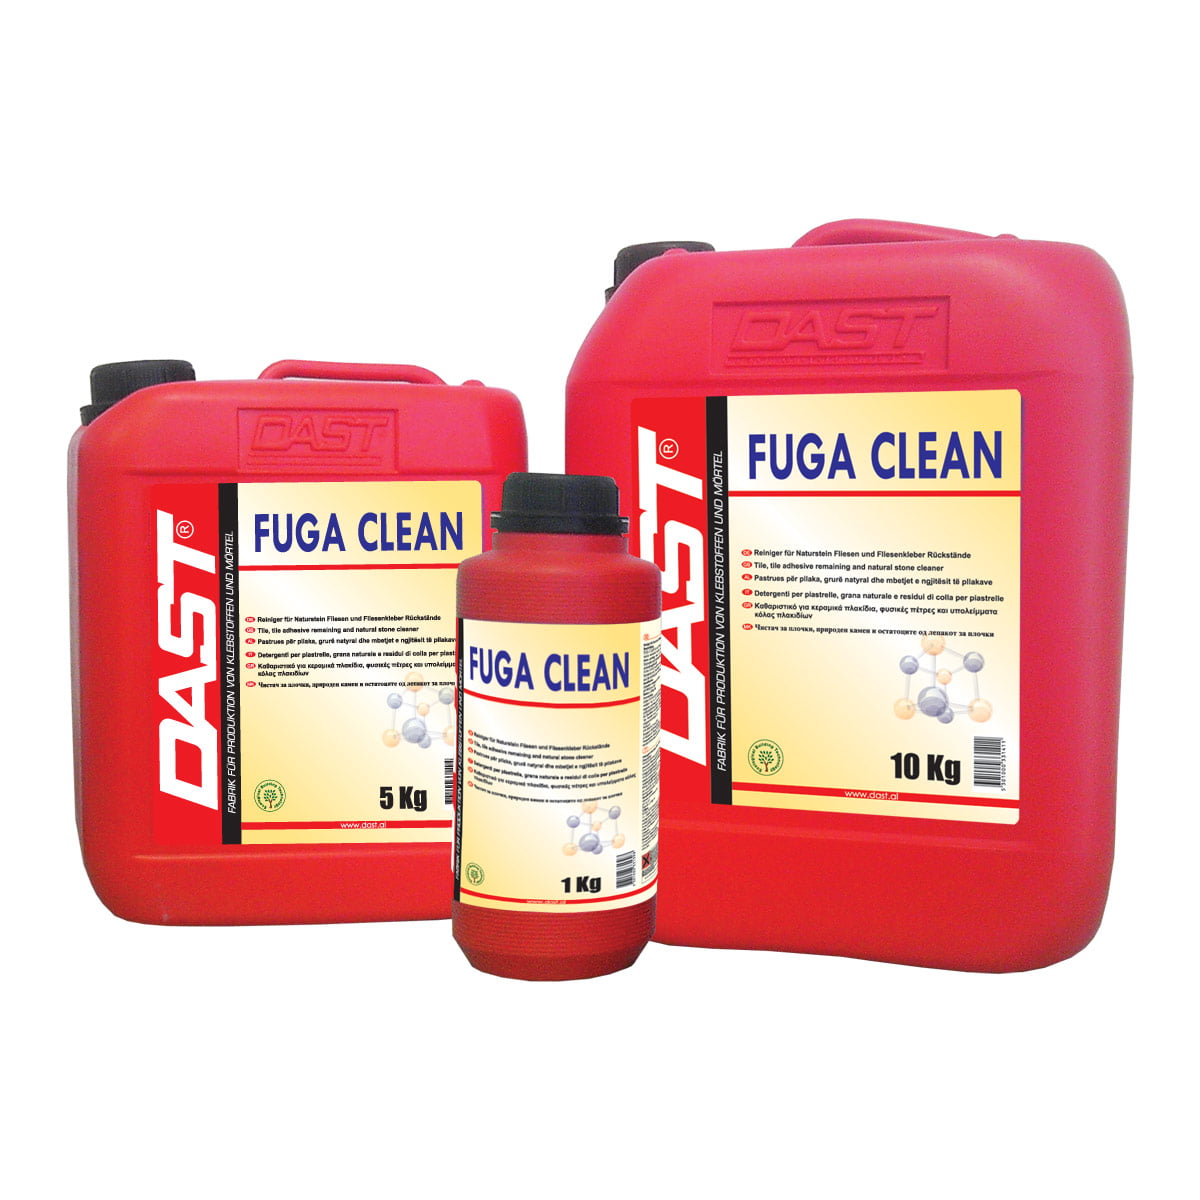 FUGA CLEAN (Tile Cleaner) - DAST